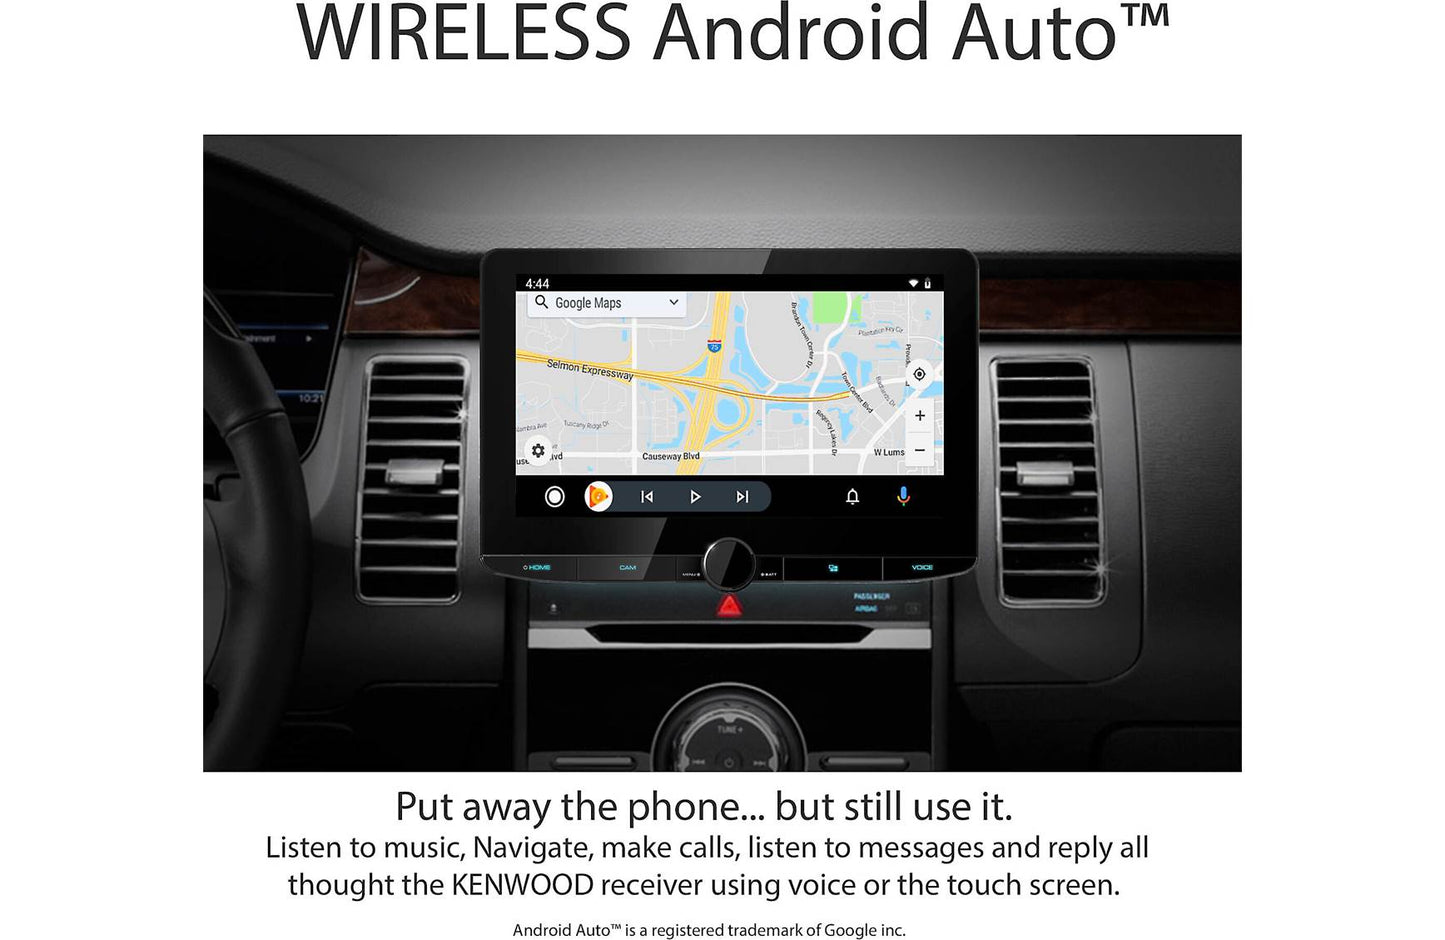 Kenwood DMX1037S 10.1" Touchscreen Car Stereo- Wireless Apple CarPlay, Android Auto + SXV300V1 SiriusXM Satellite Tuner